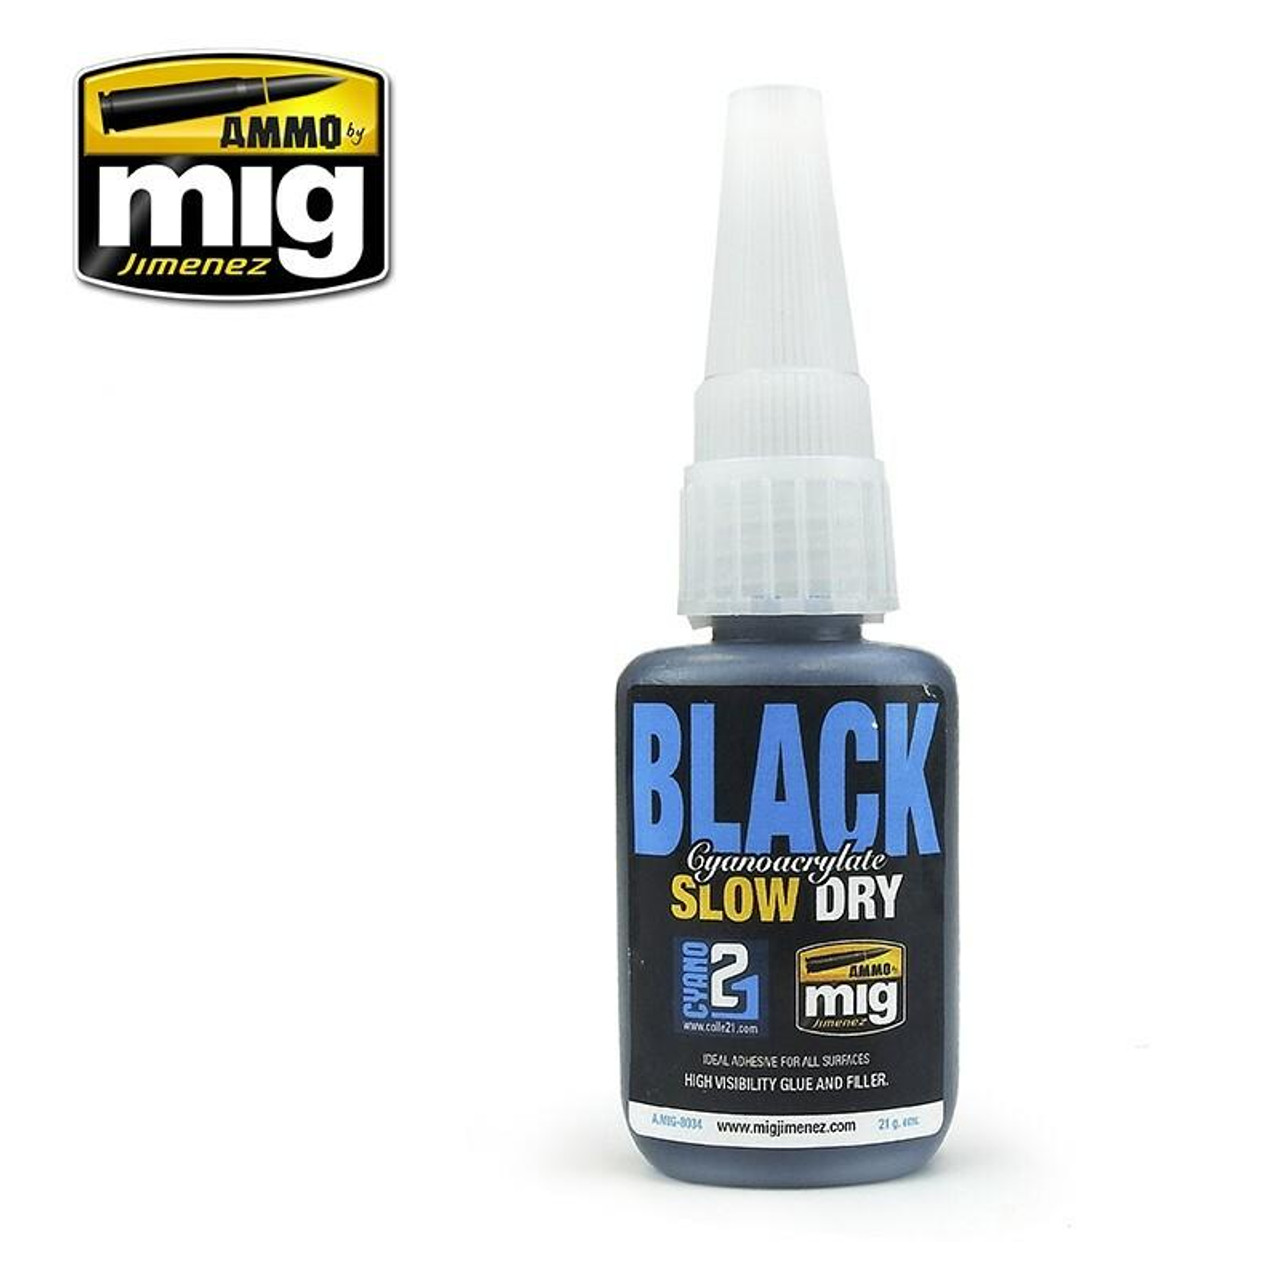 Black CA Glue Slow Dry High Visibility 21g 8034